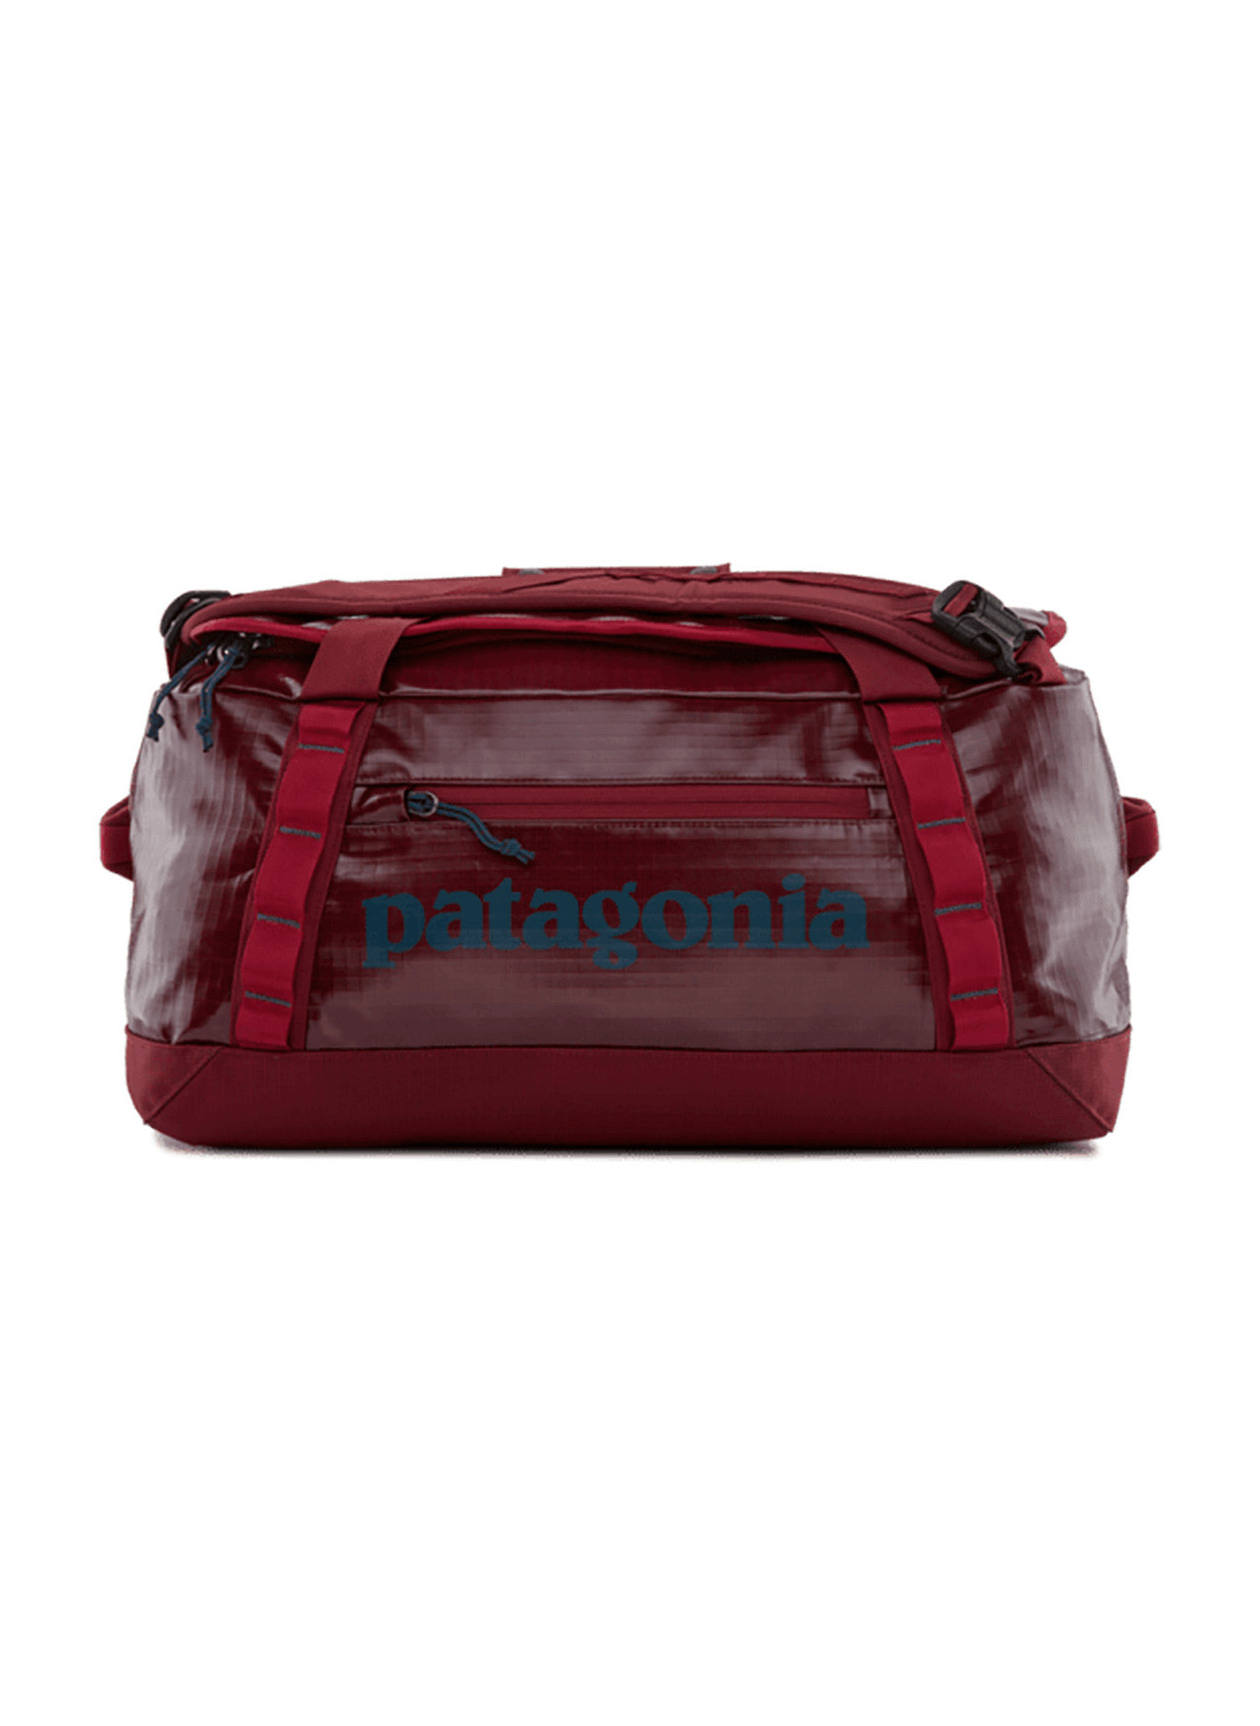 Patagonia Wax Red Black Hole Duffel Bag 40L